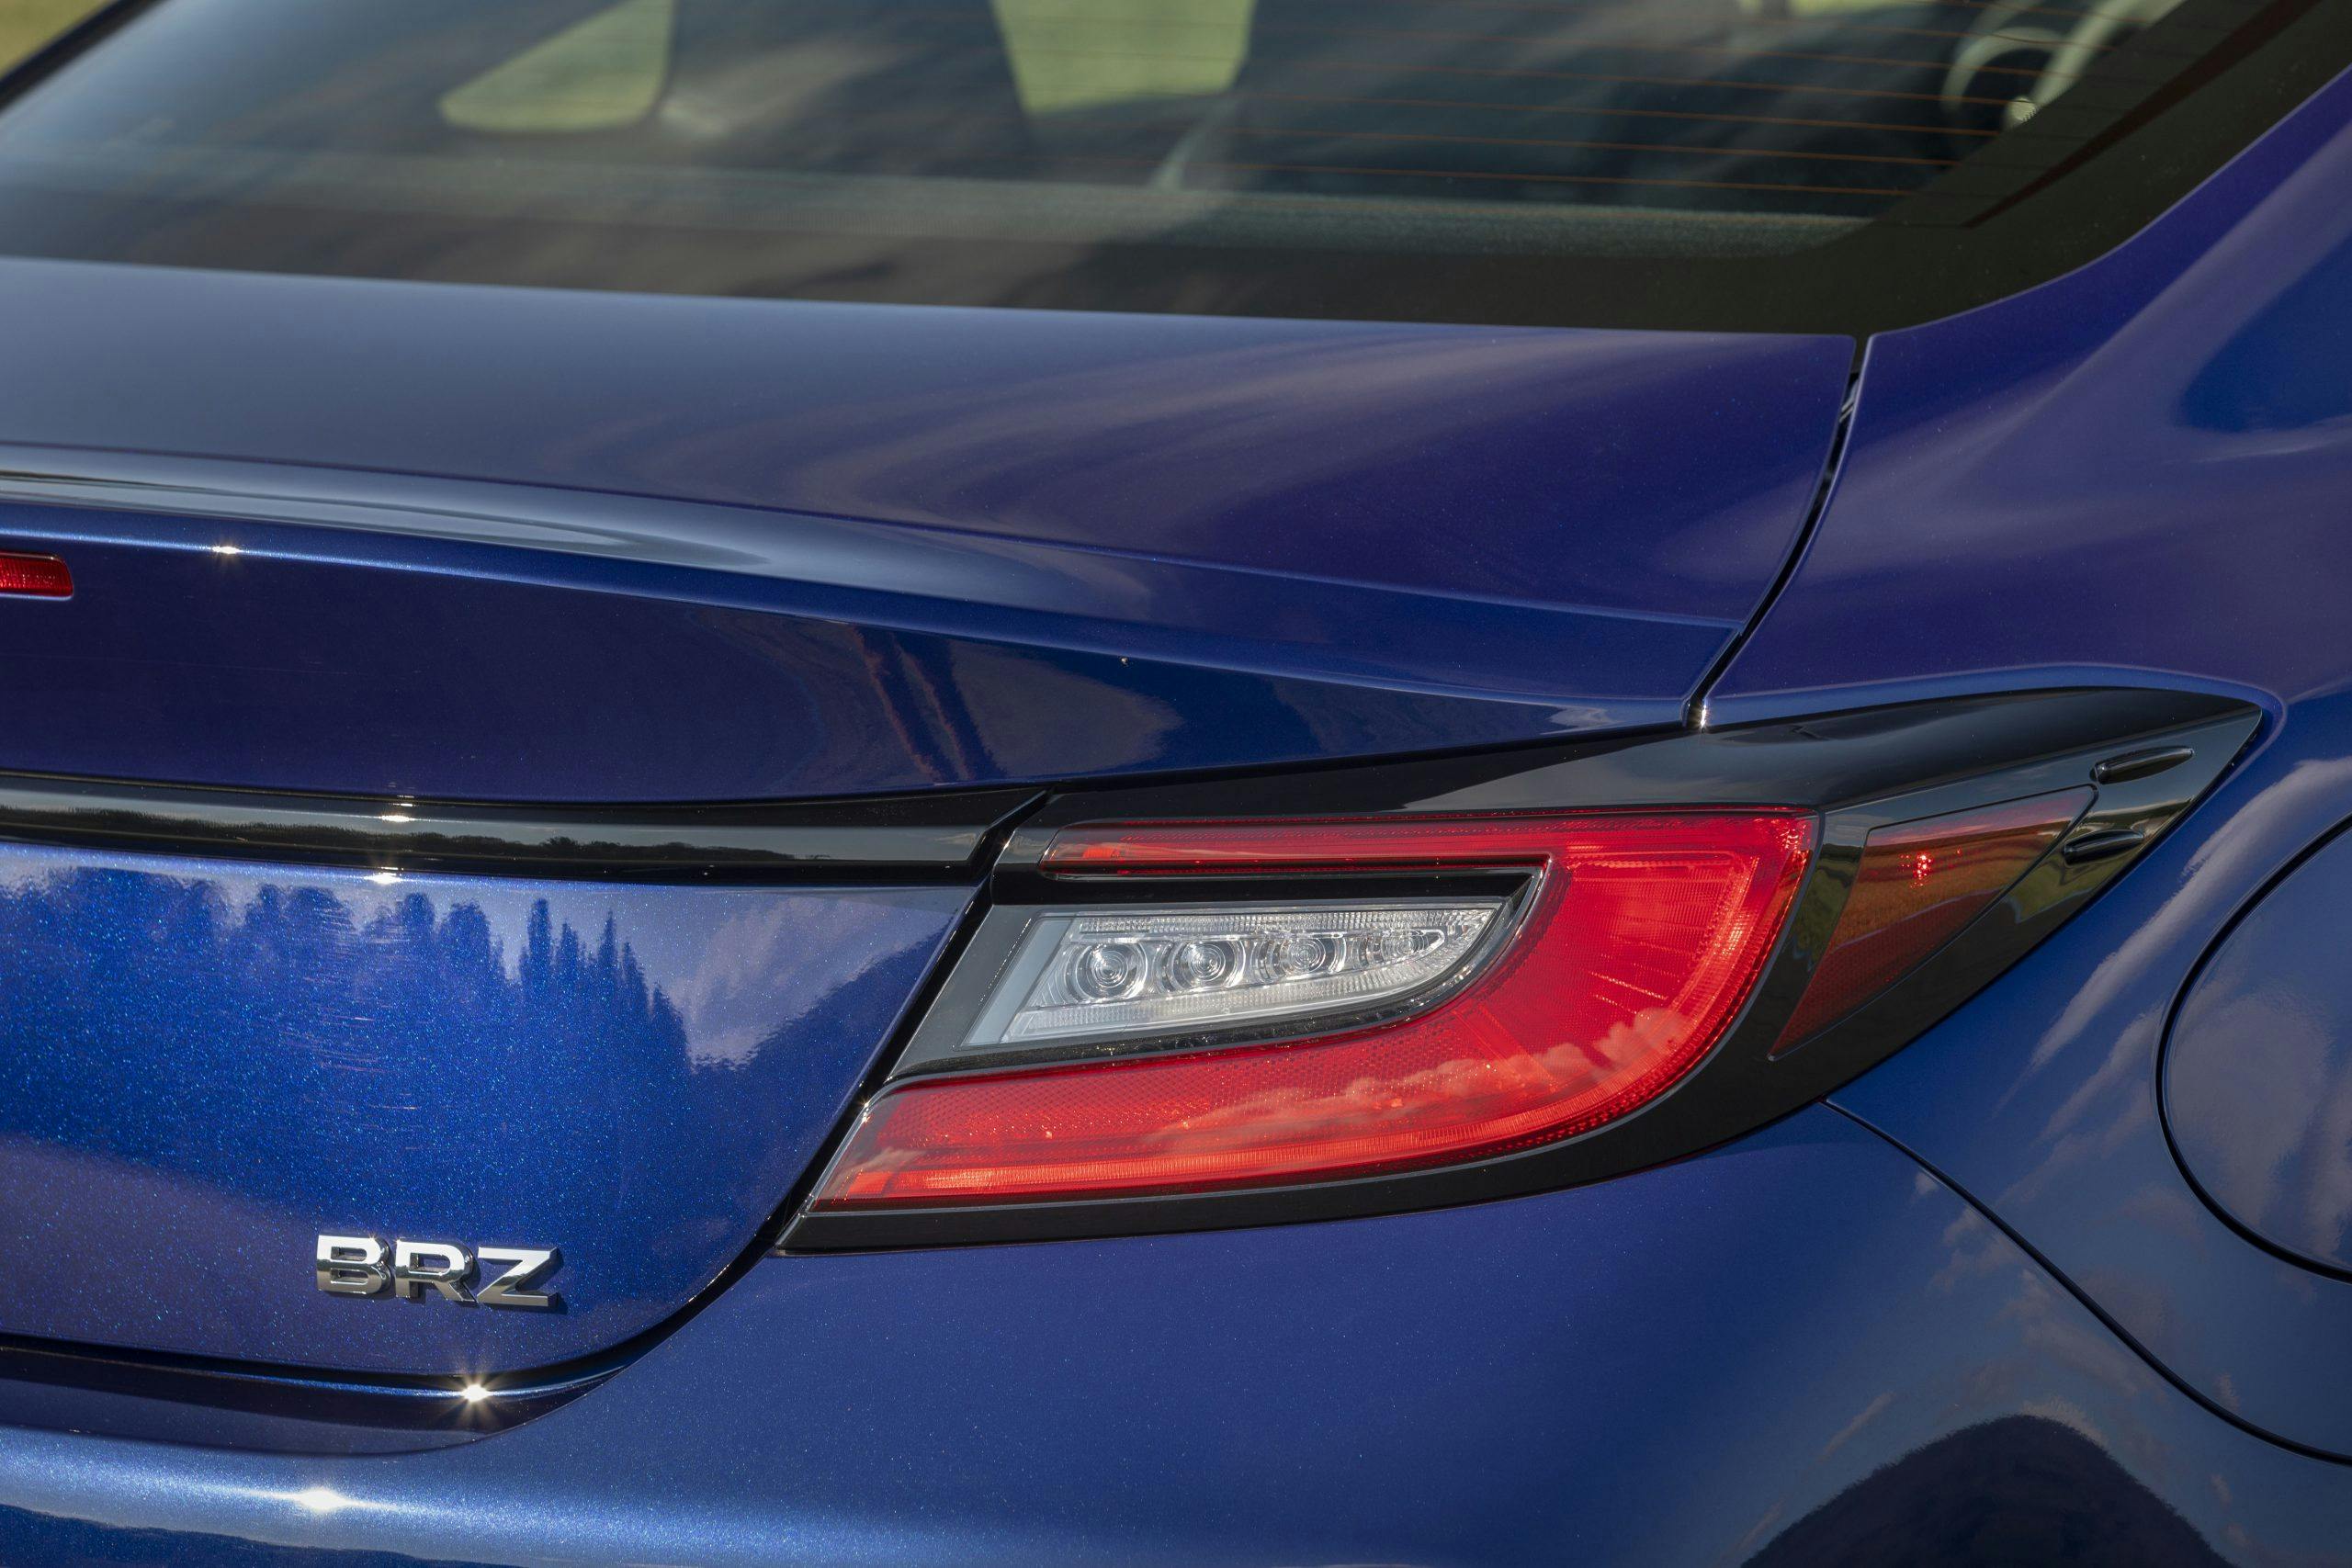 2022 Subaru BRZ rear taillight